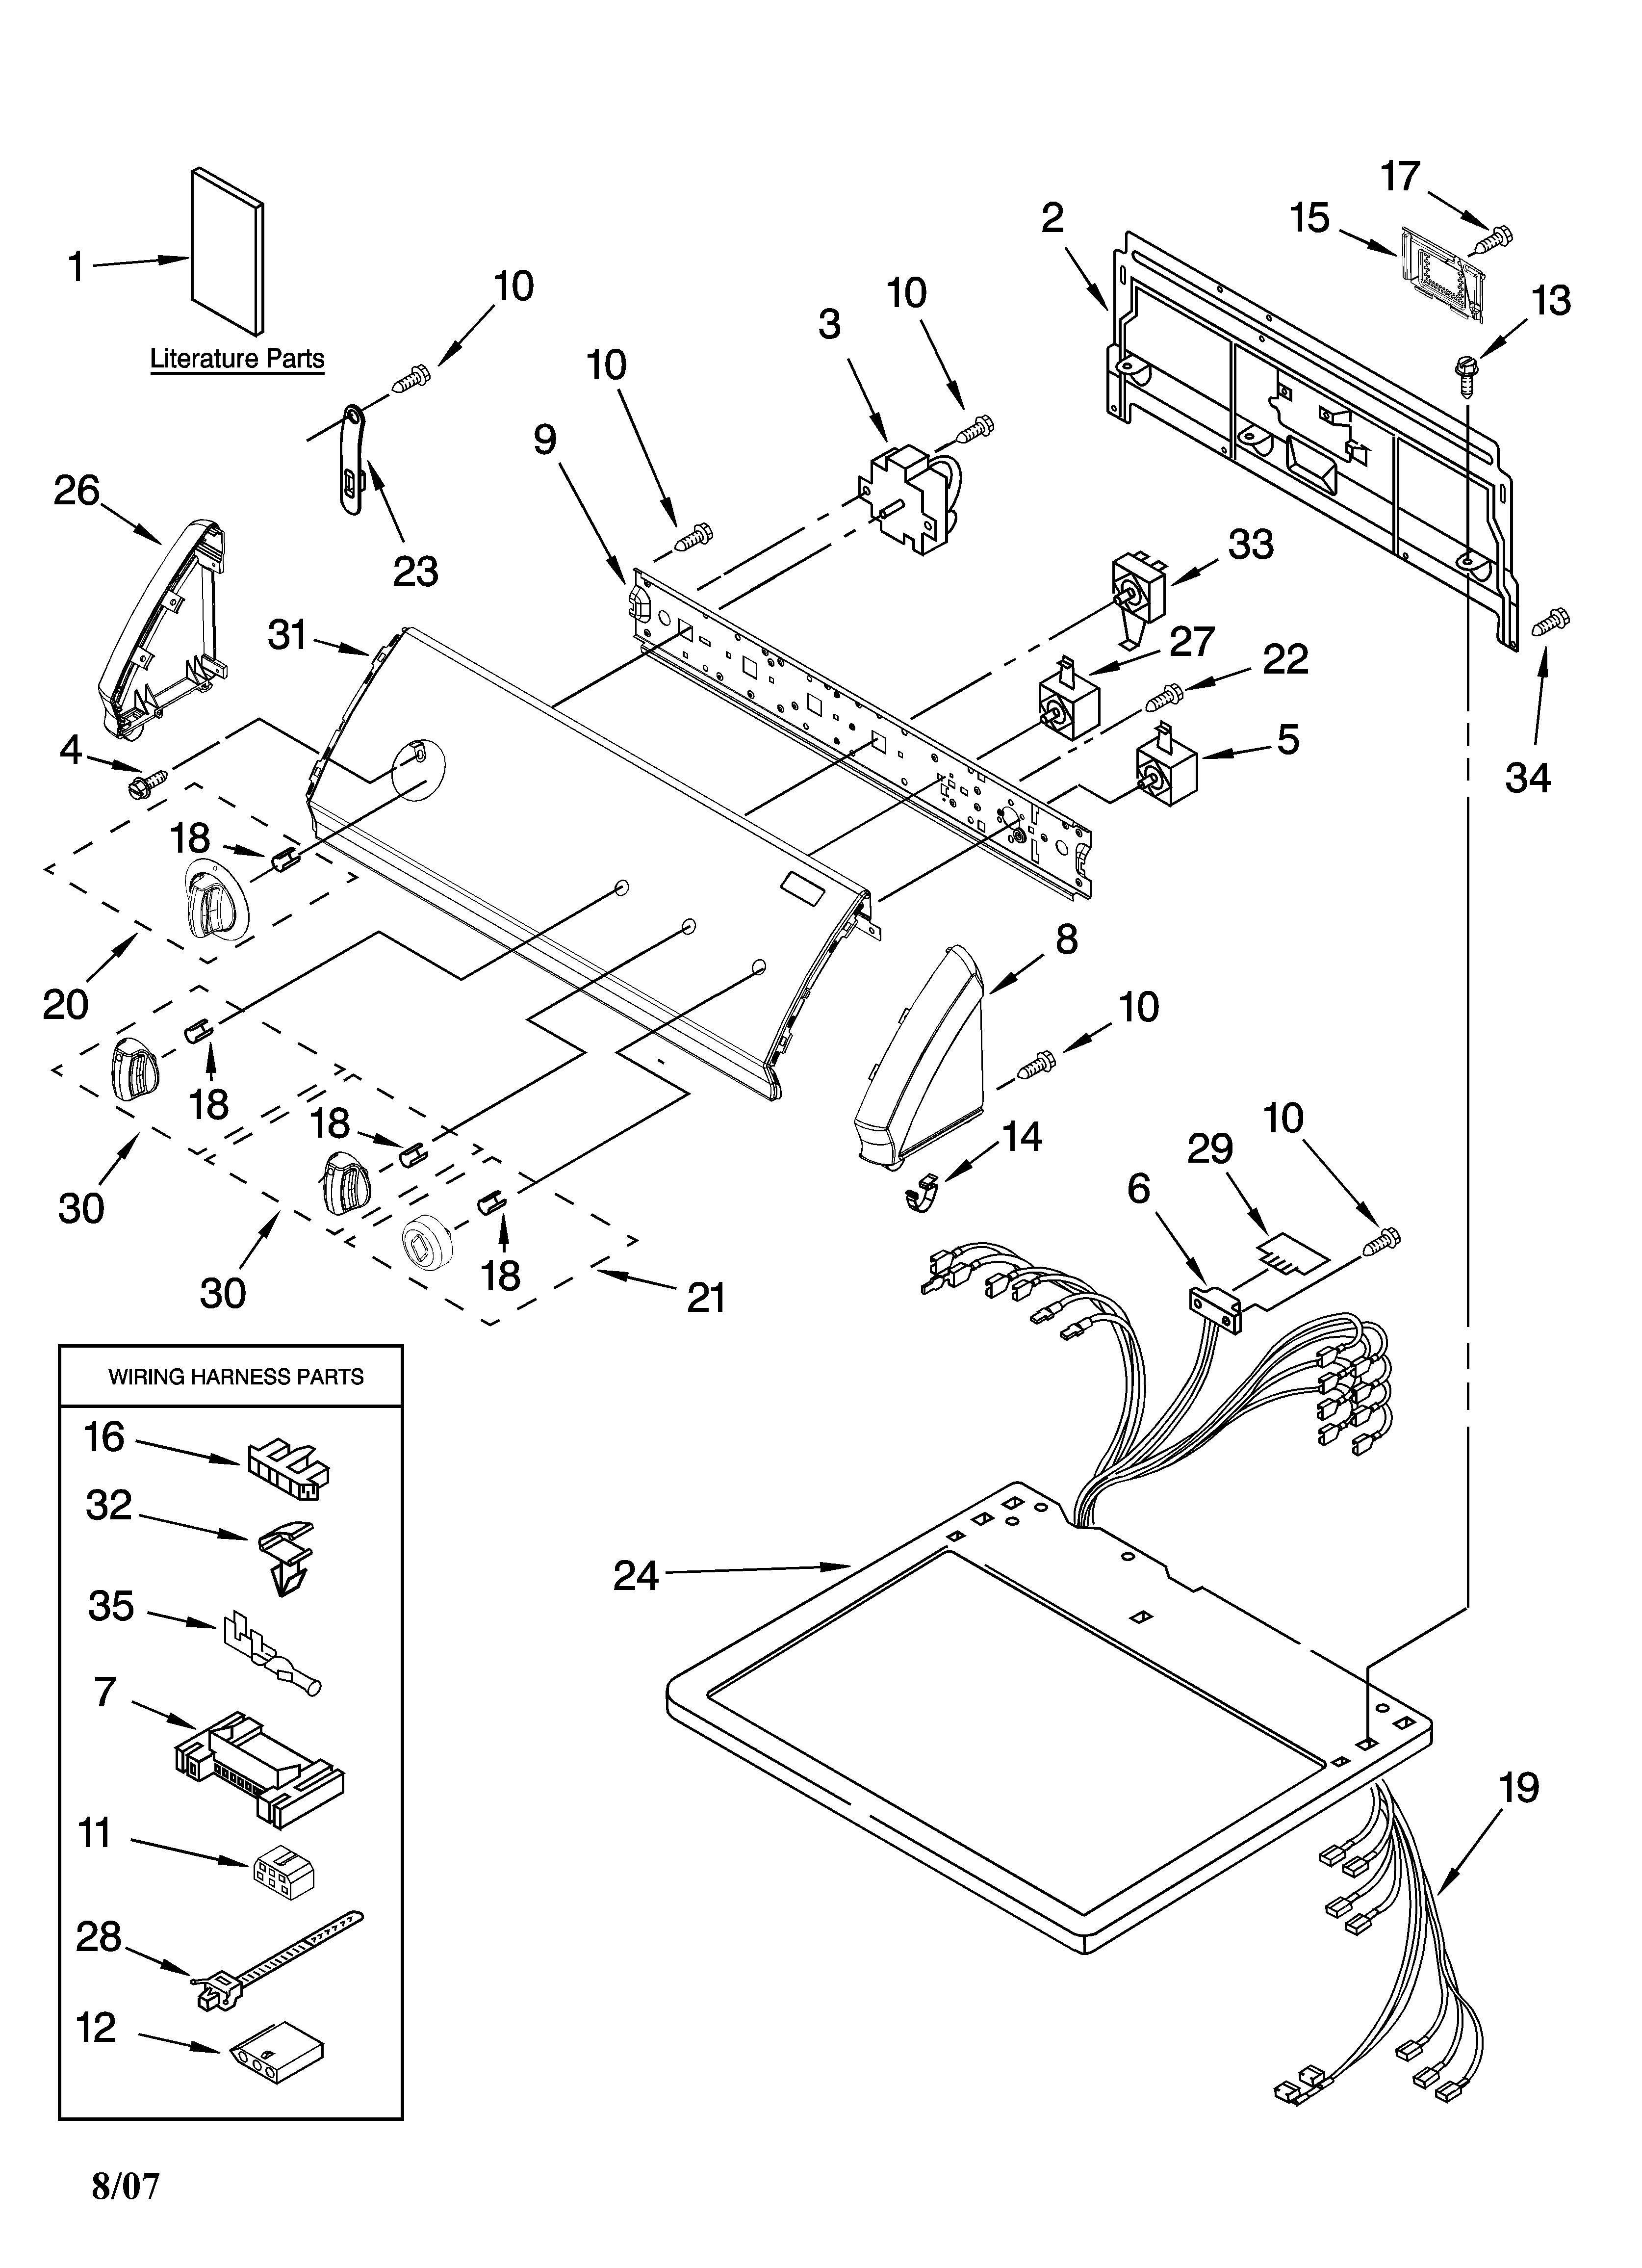 Kenmore dryer model 110 parts diagram